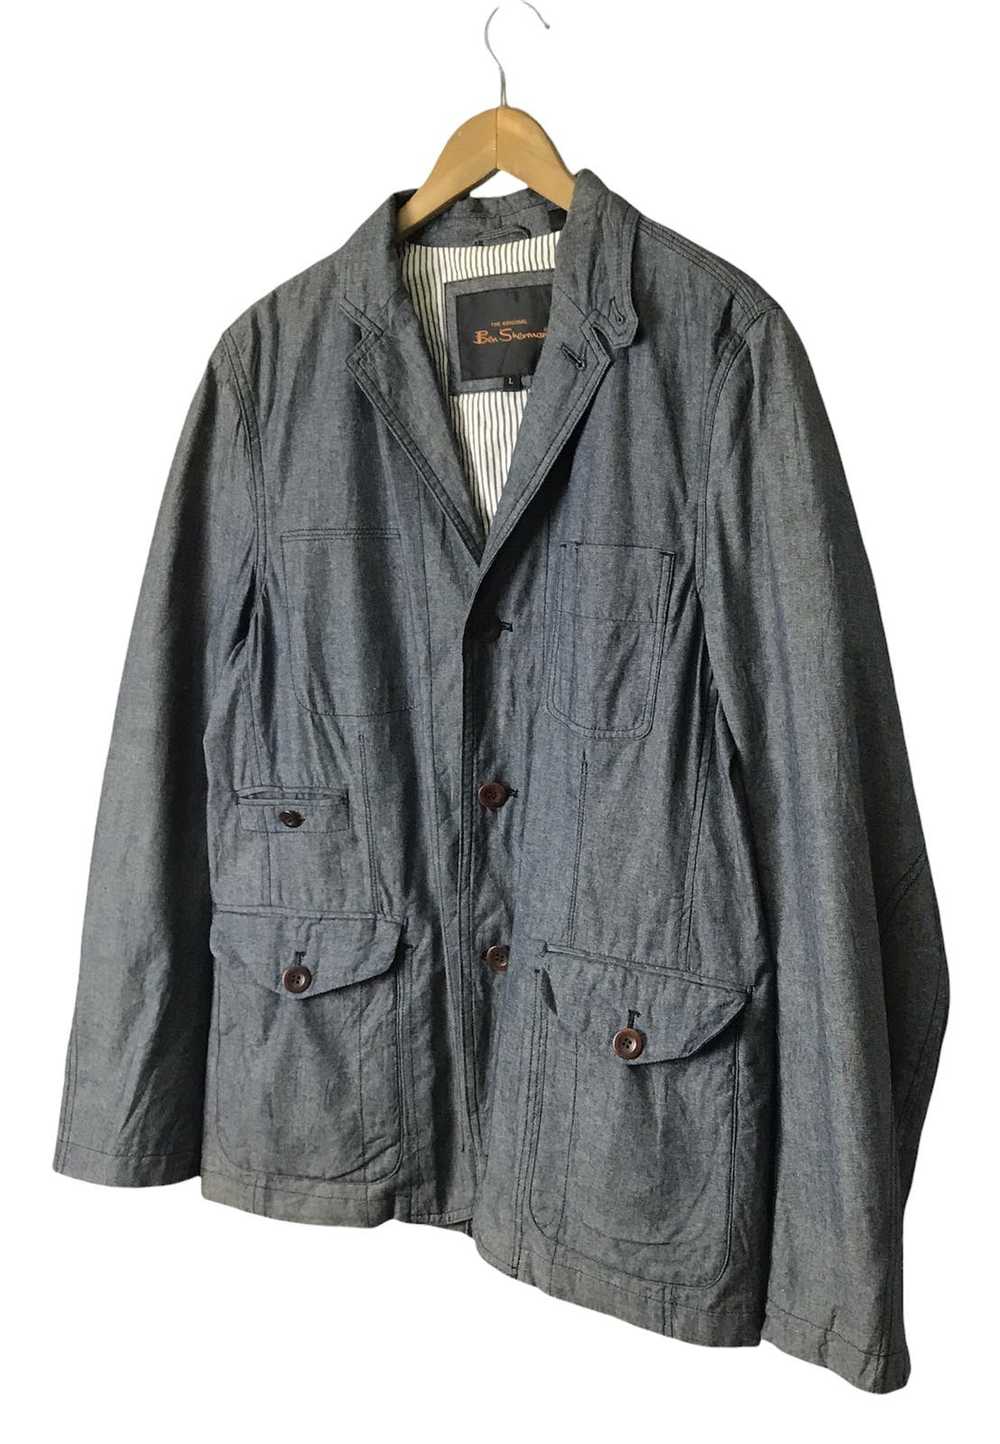 Ben sherman linen chore jacket - image 5